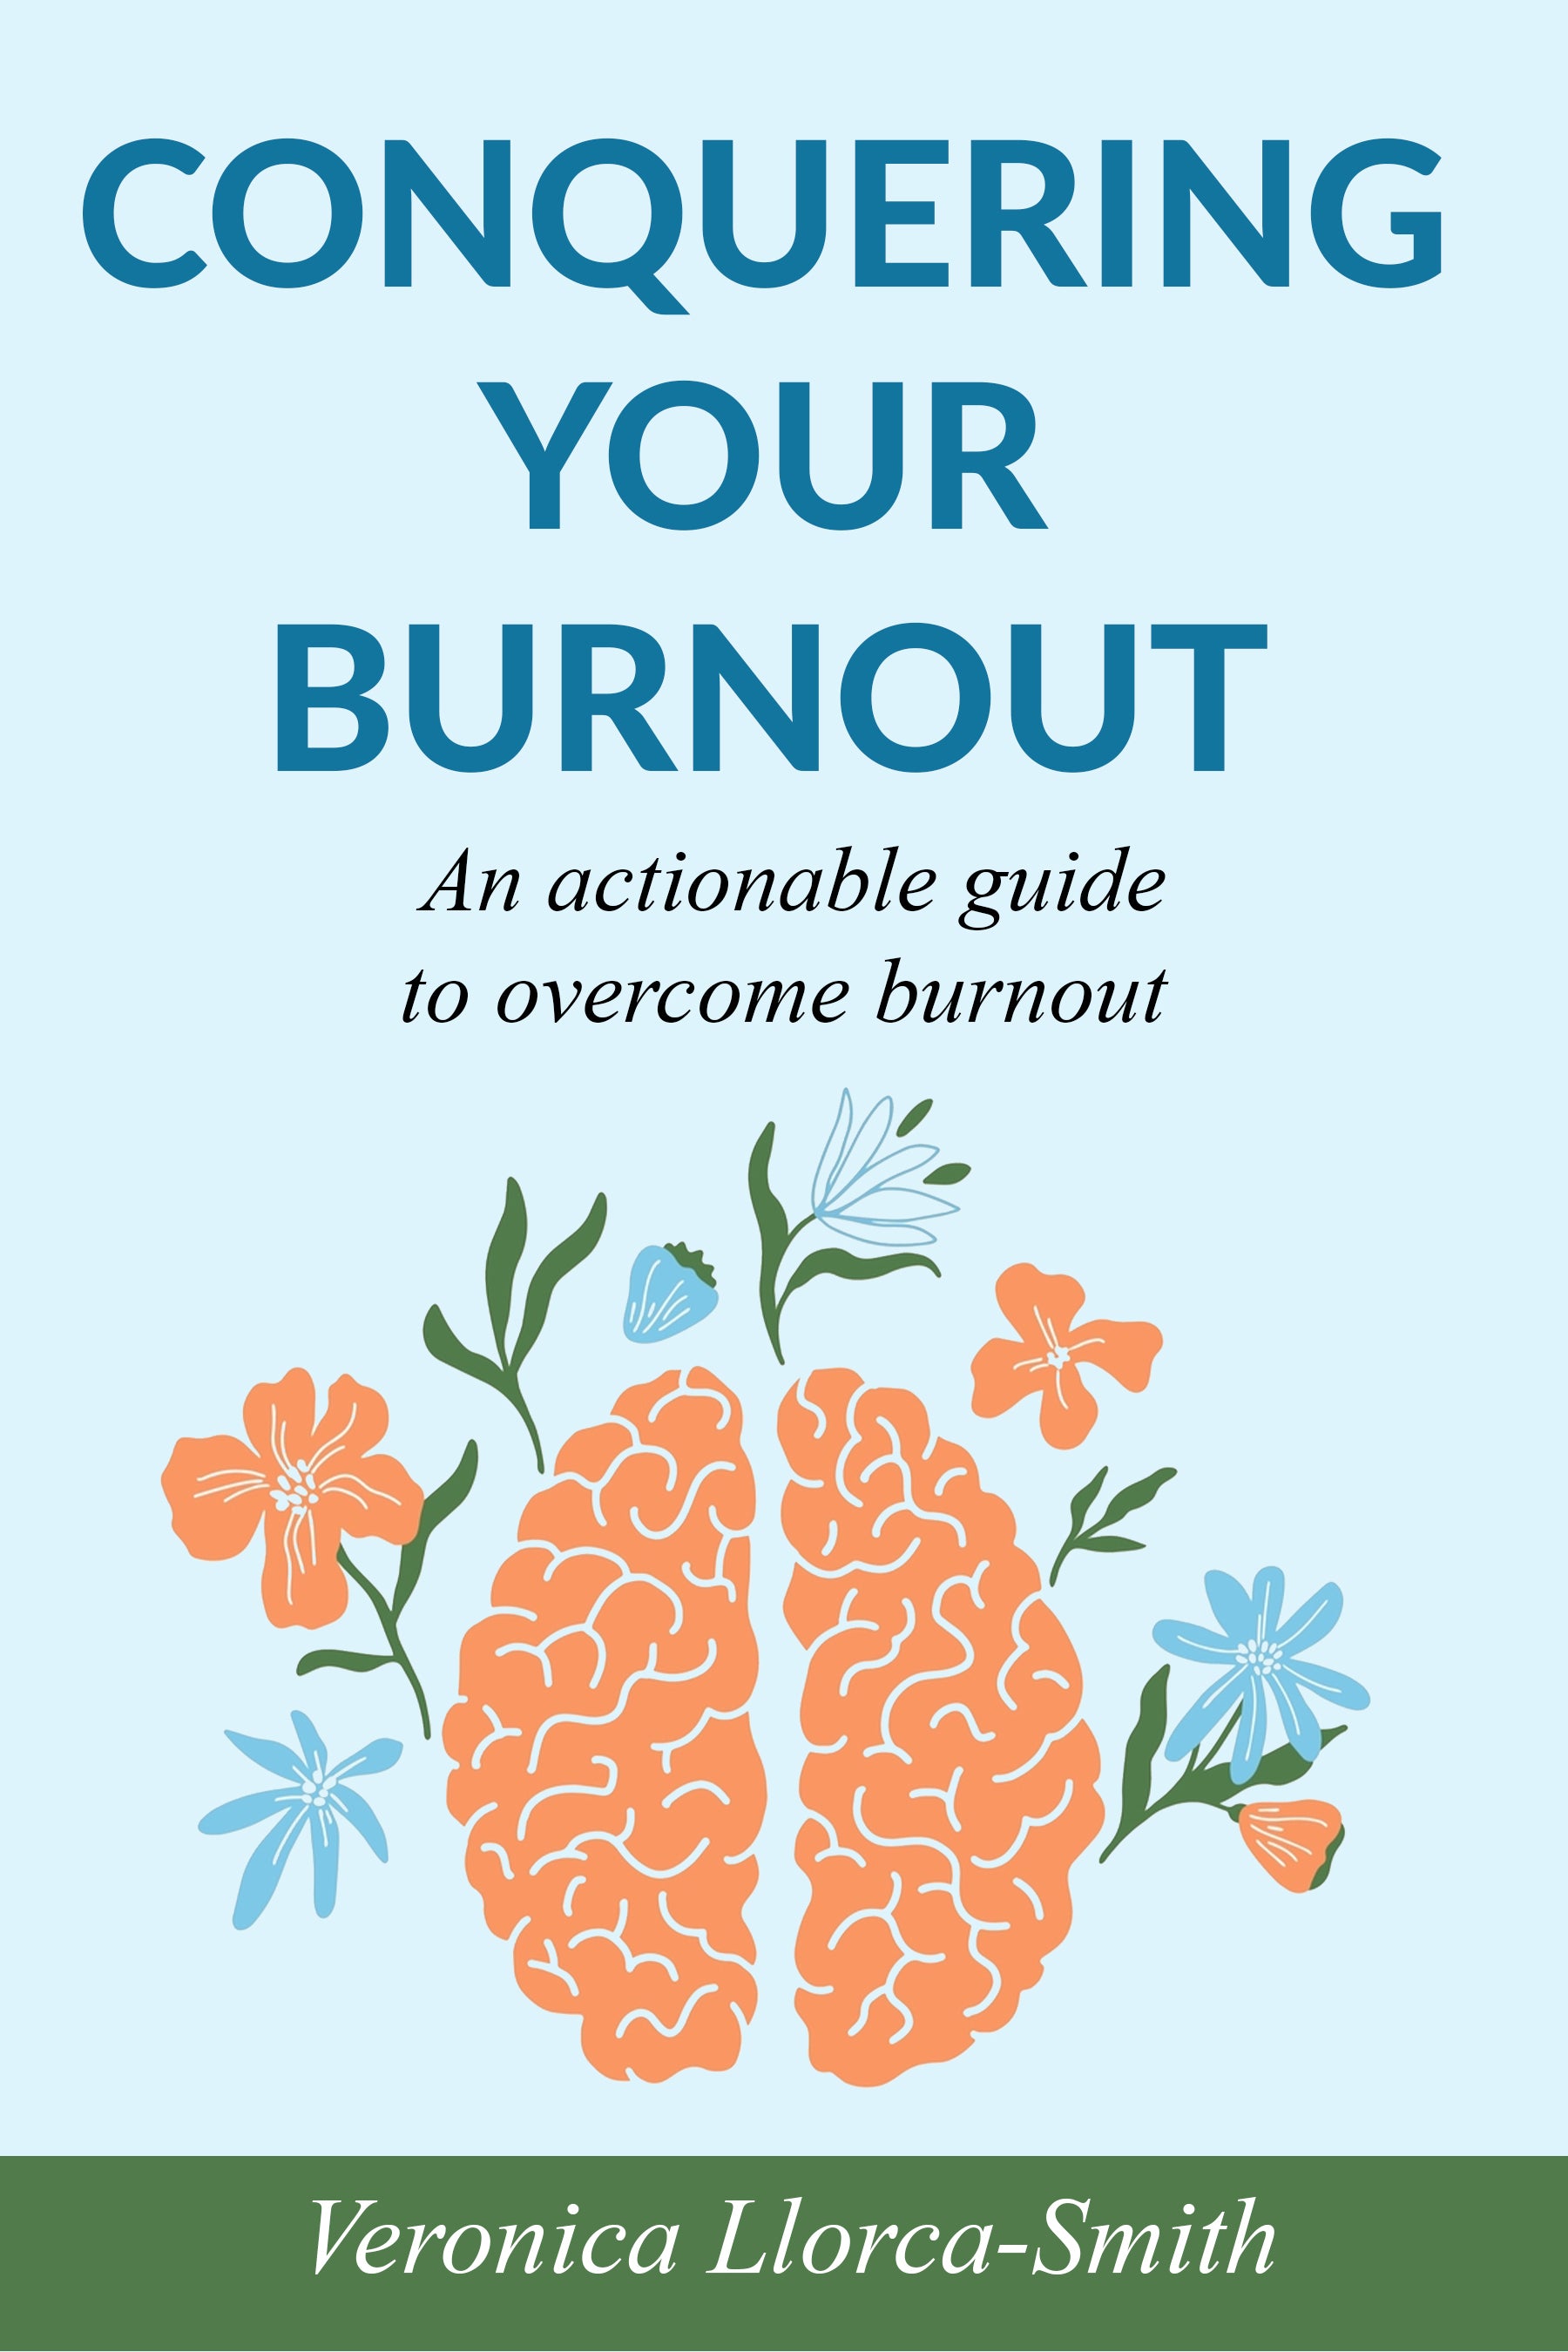 Conquering Your Burnout